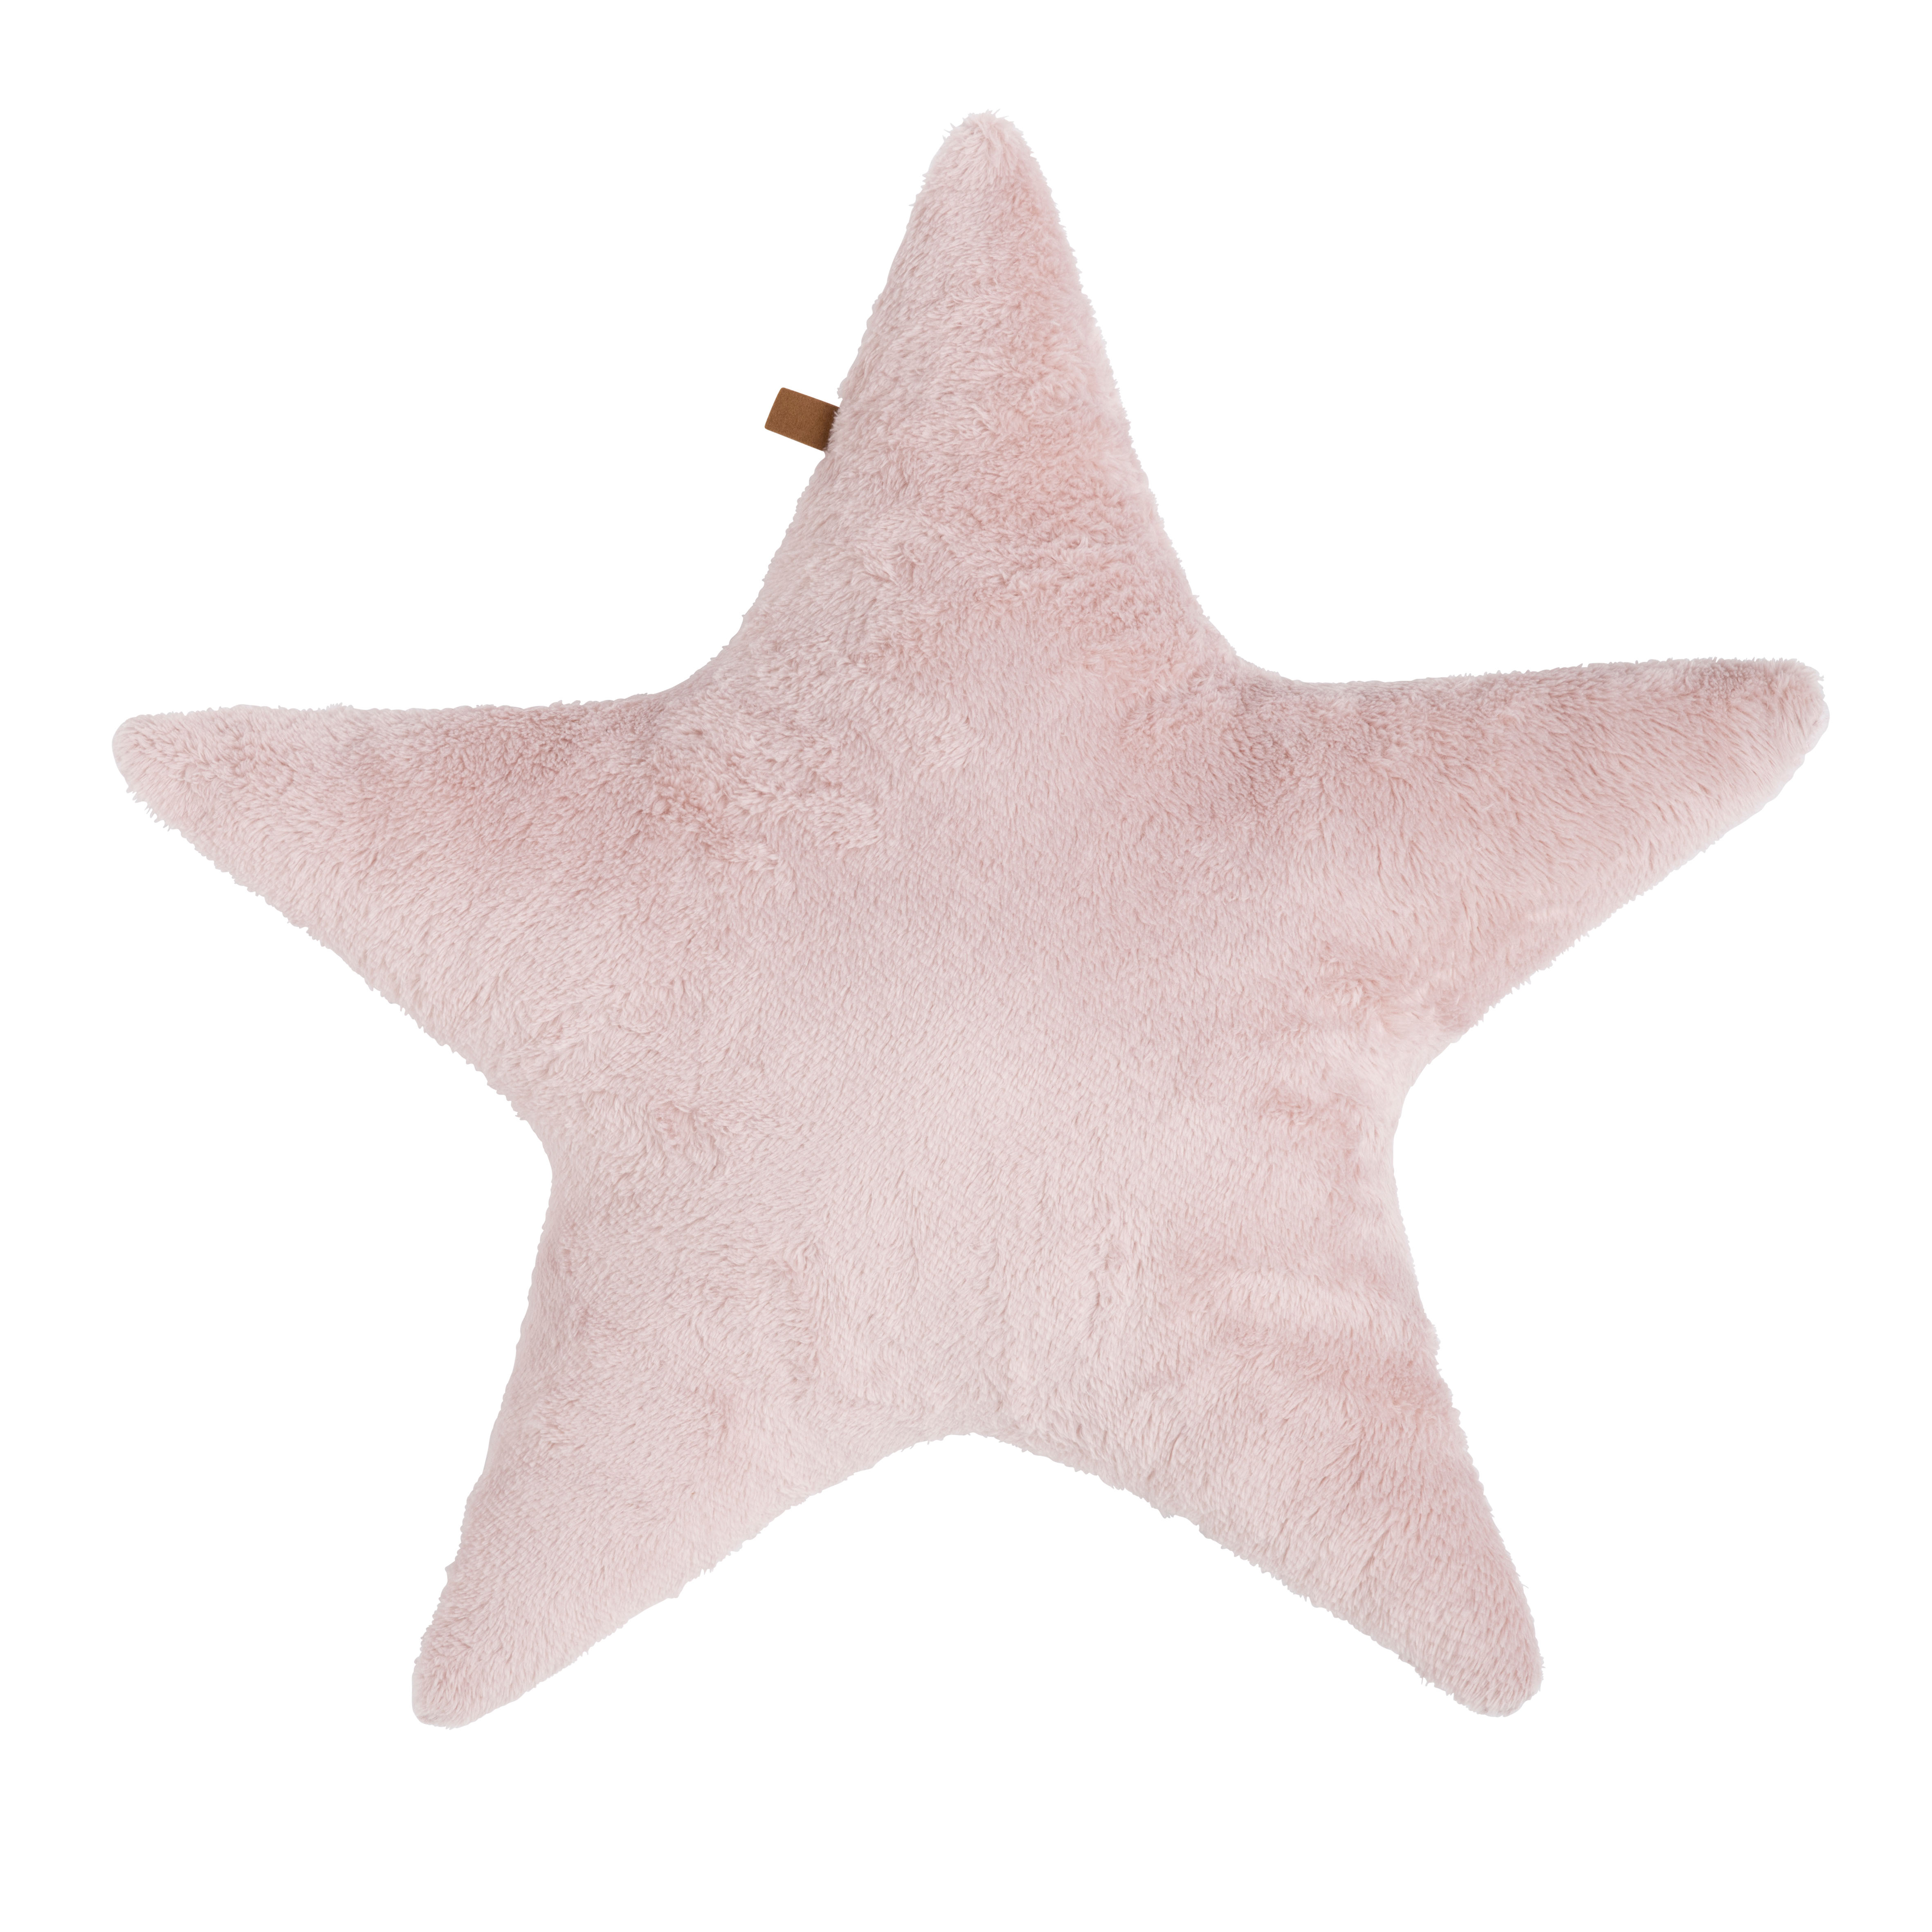 Pillow star teddy Sense old pink